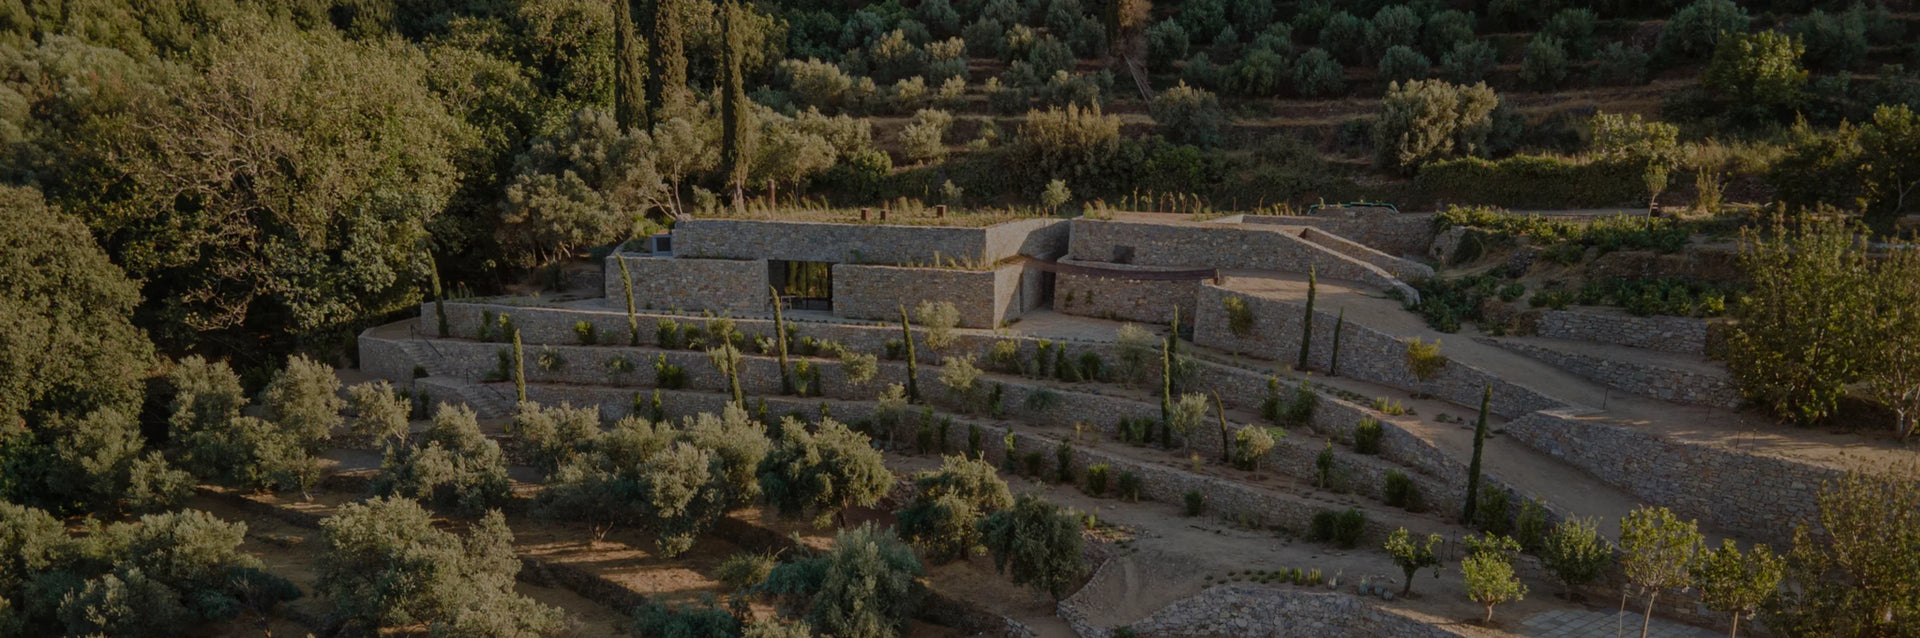 METAXA vineyard on Samos